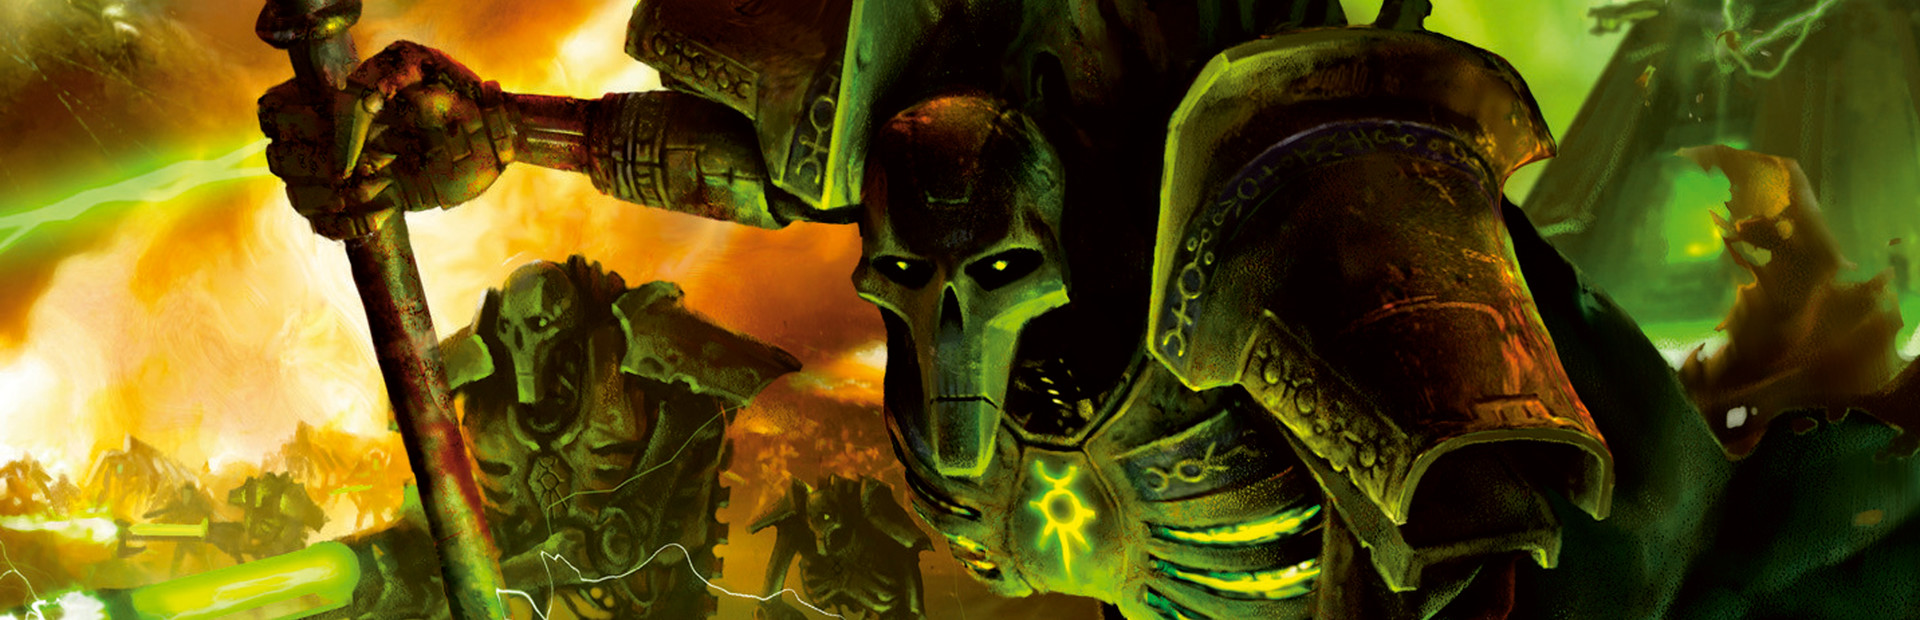 Warhammer® 40,000: Dawn of War® - Dark Crusade cover image